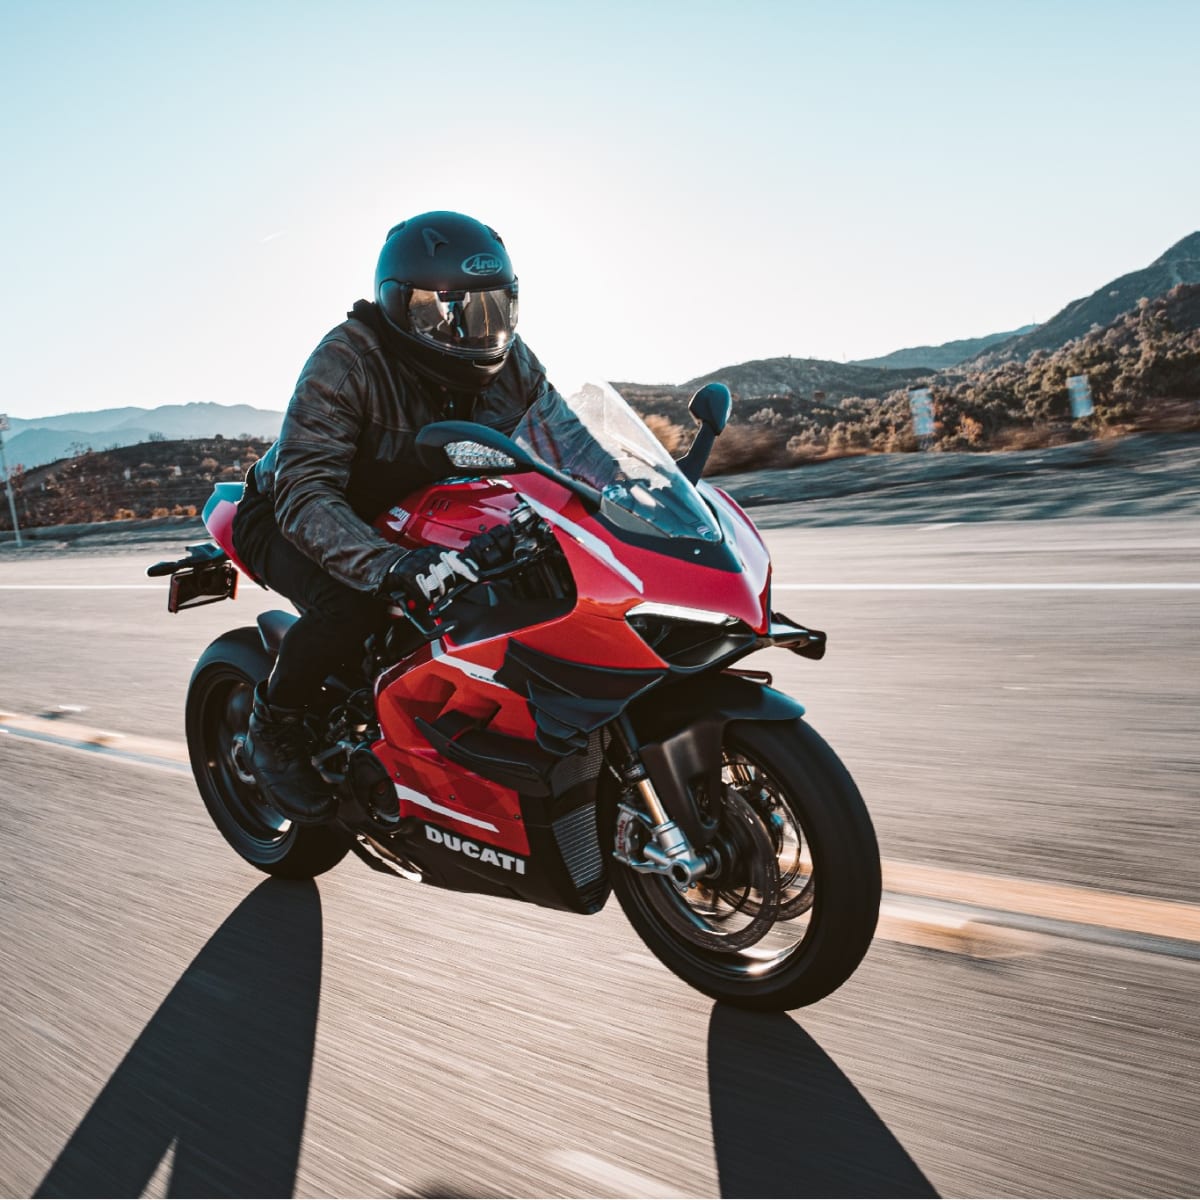 Exclusive Test Ride: Ducati's $100,000 Superleggera V4